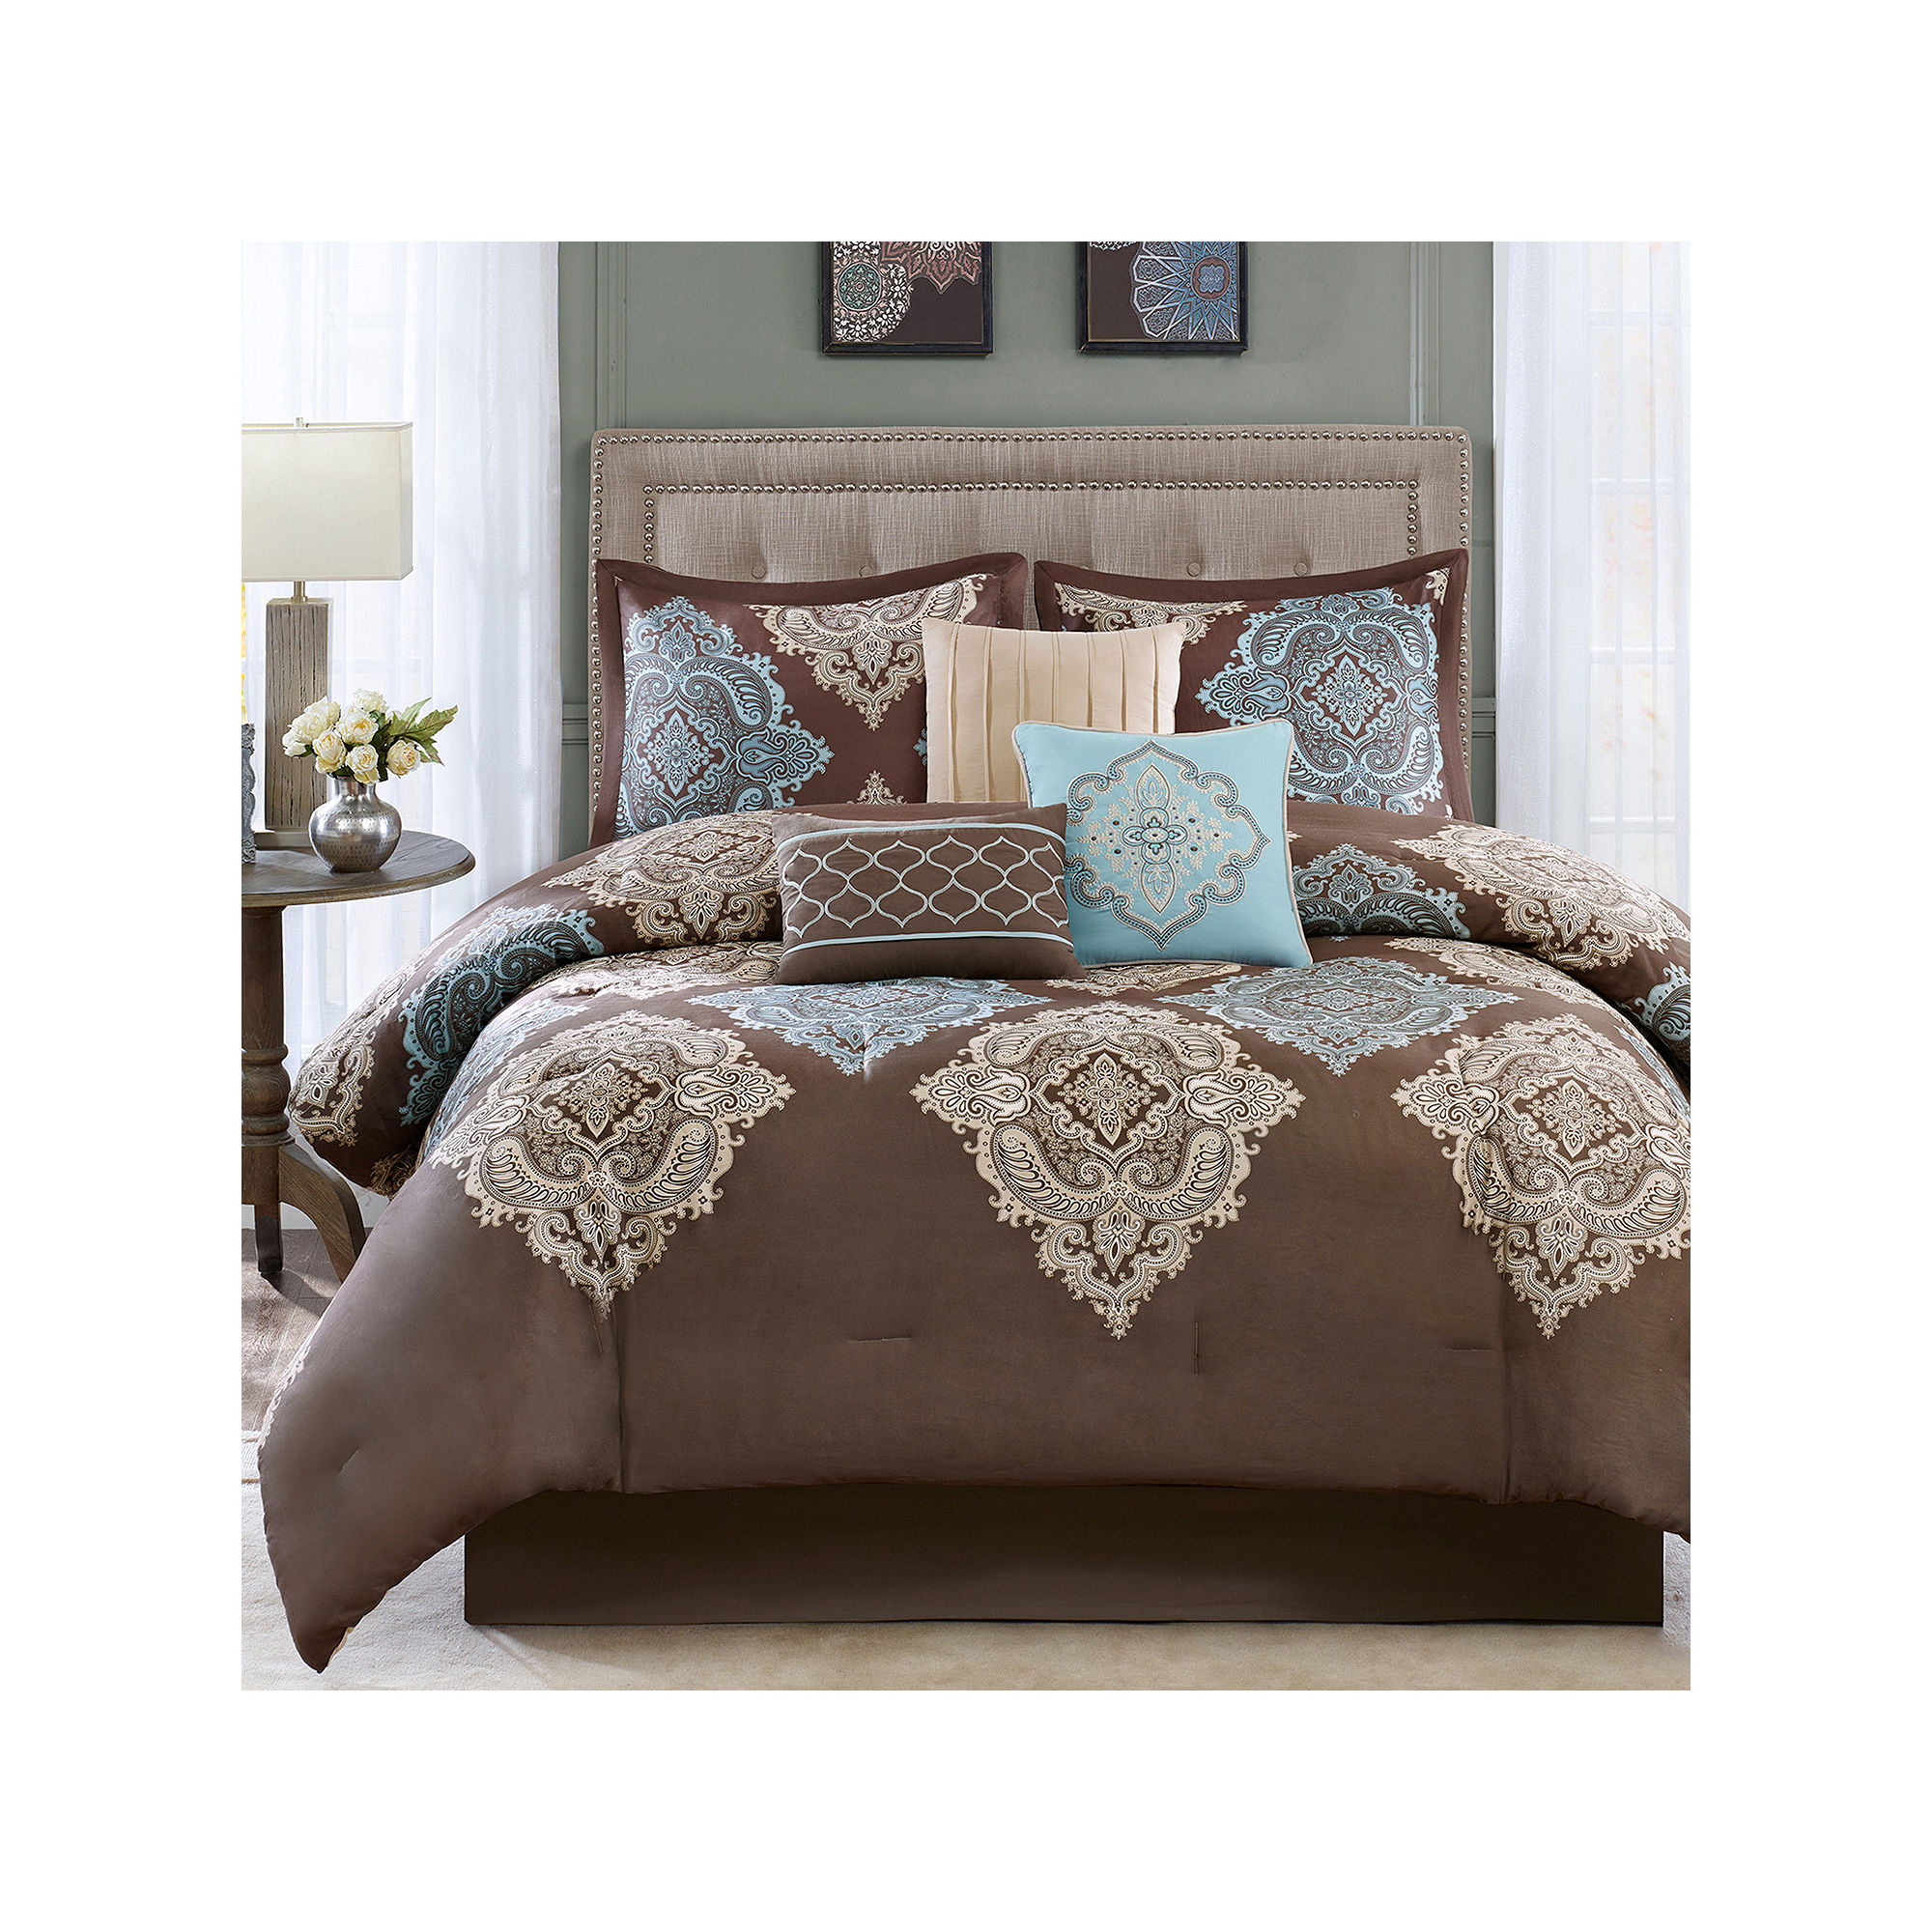 Cheap Madison Park Barnett 7 Pc Comforter Set Limited Bedding Sets Store